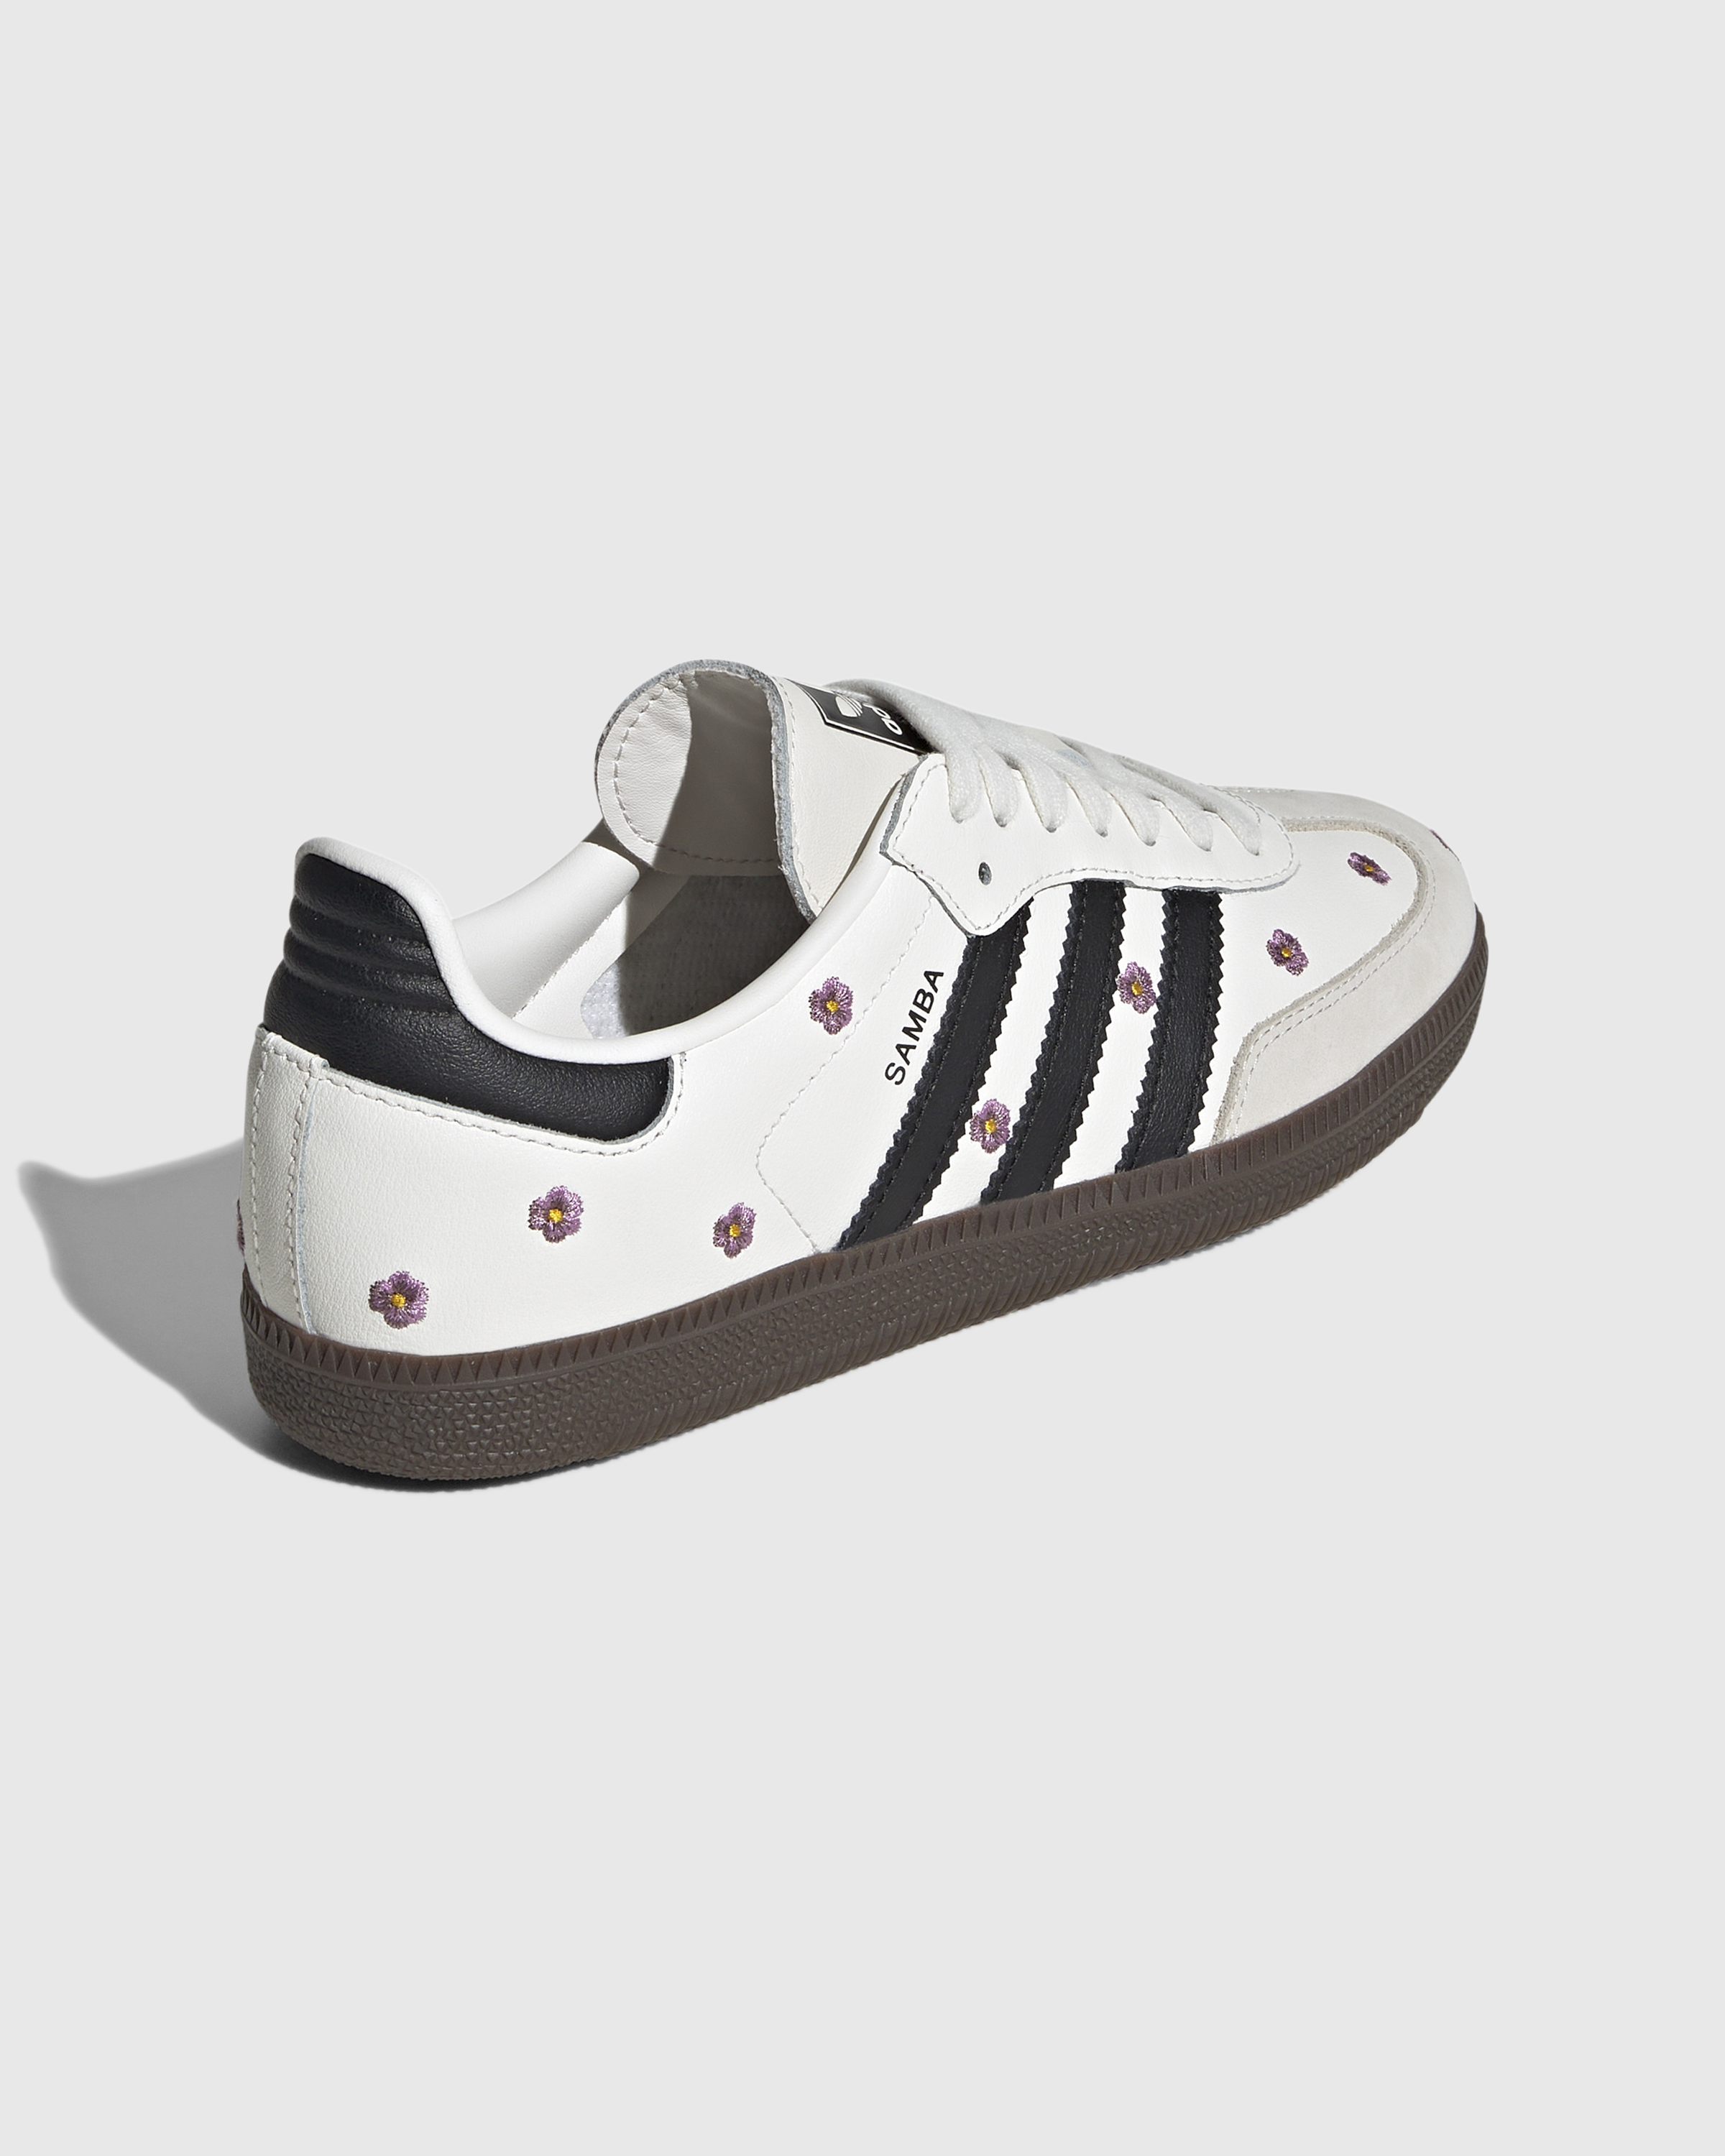 Adidas – Samba OG W White/Black/Gum - Low Top Sneakers - White - Image 4